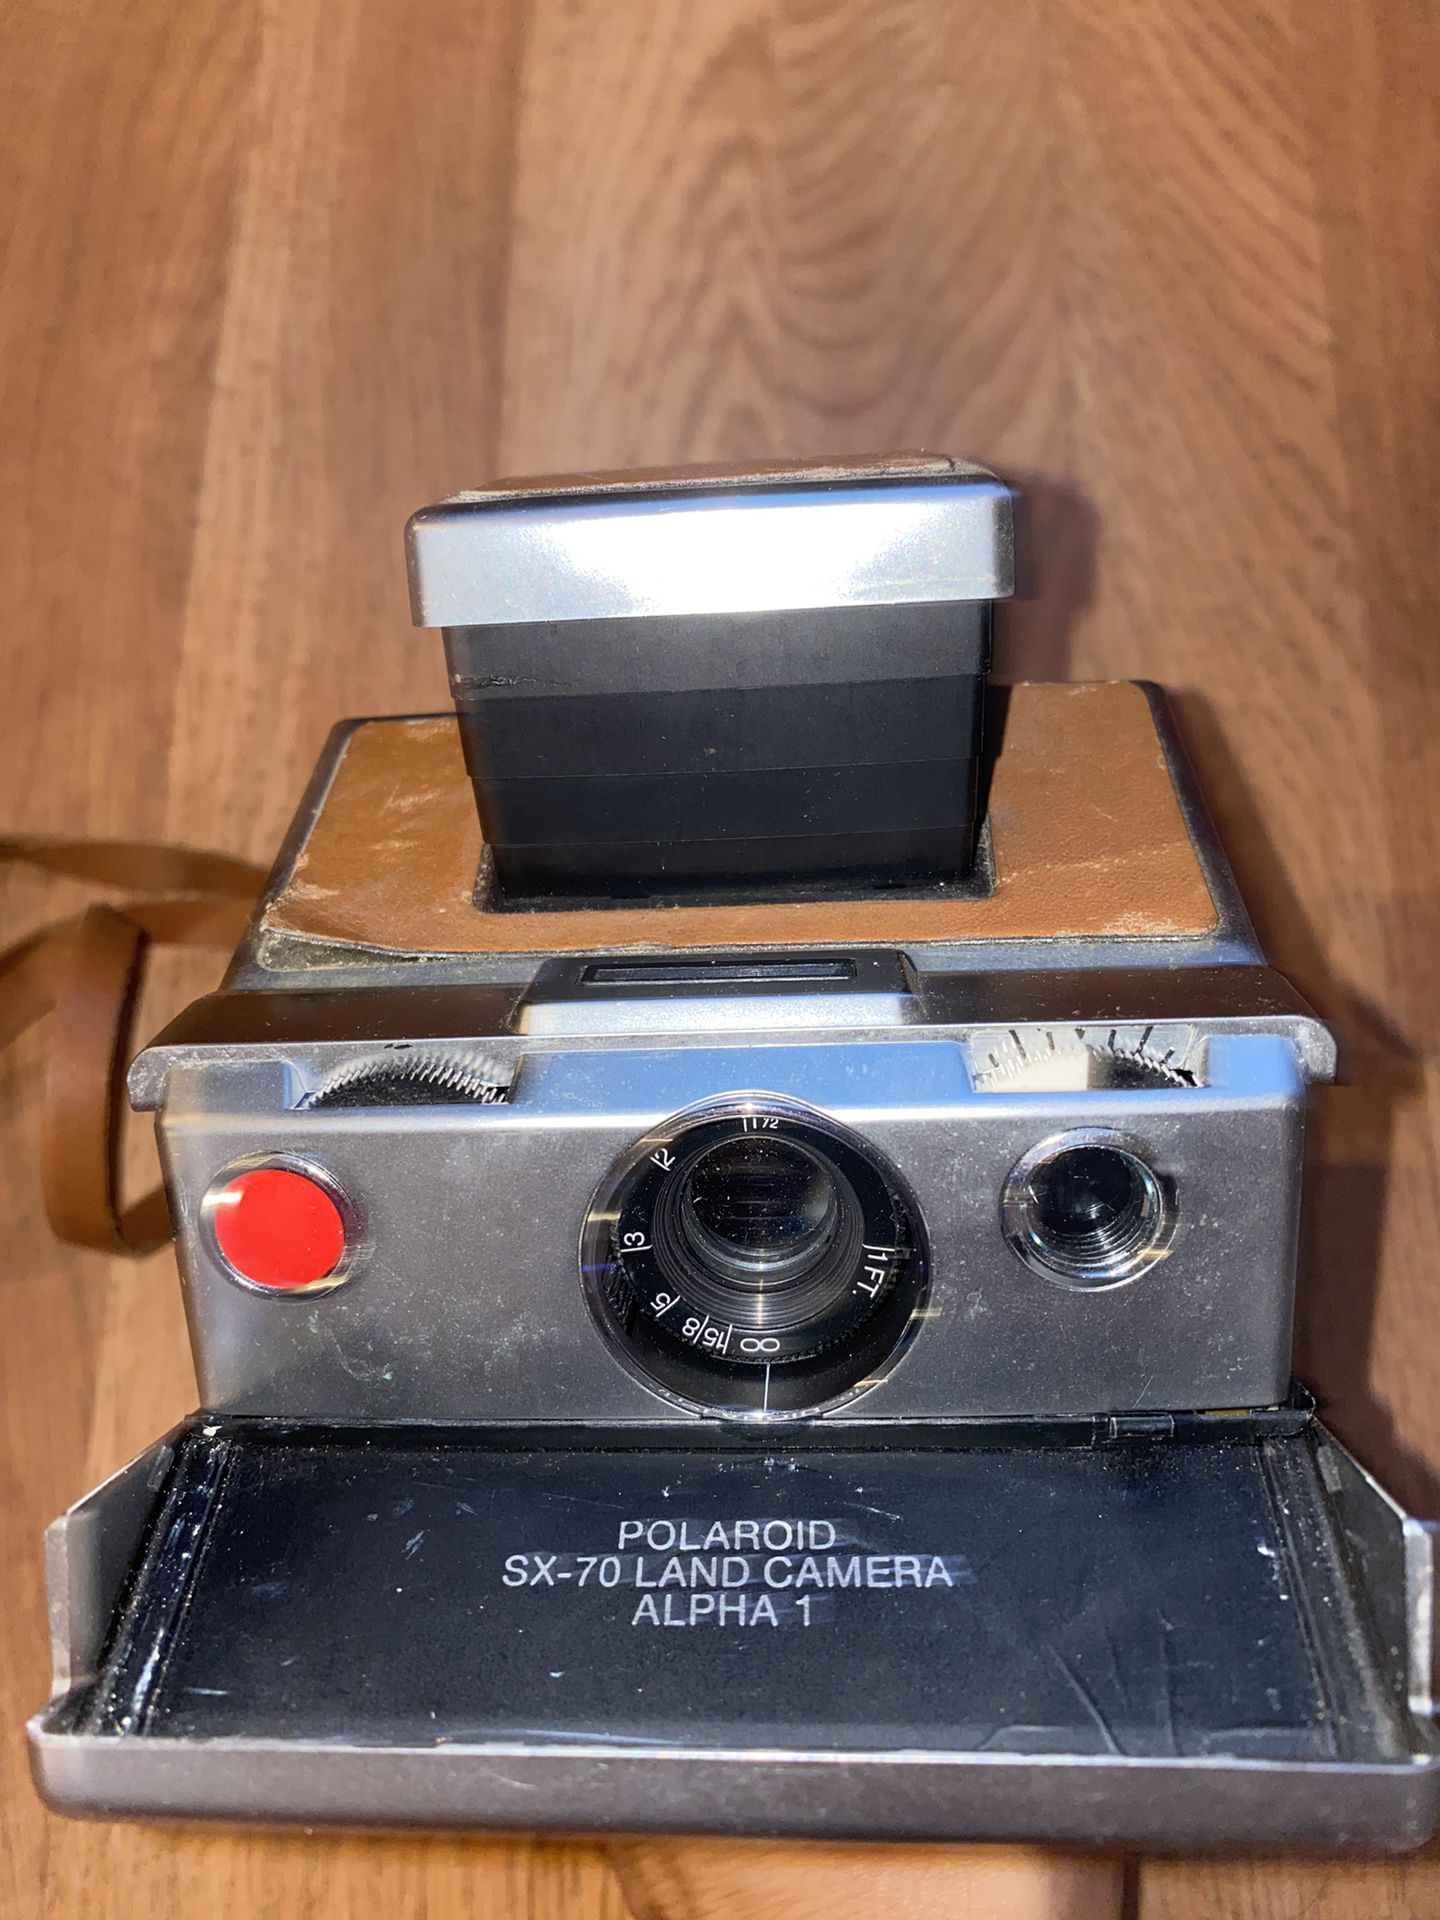 erwt Op tijd avontuur Polaroid Vintage SX-70 Land Camera Alpha 1 ~1973 for Sale in Buena Park, CA  - OfferUp